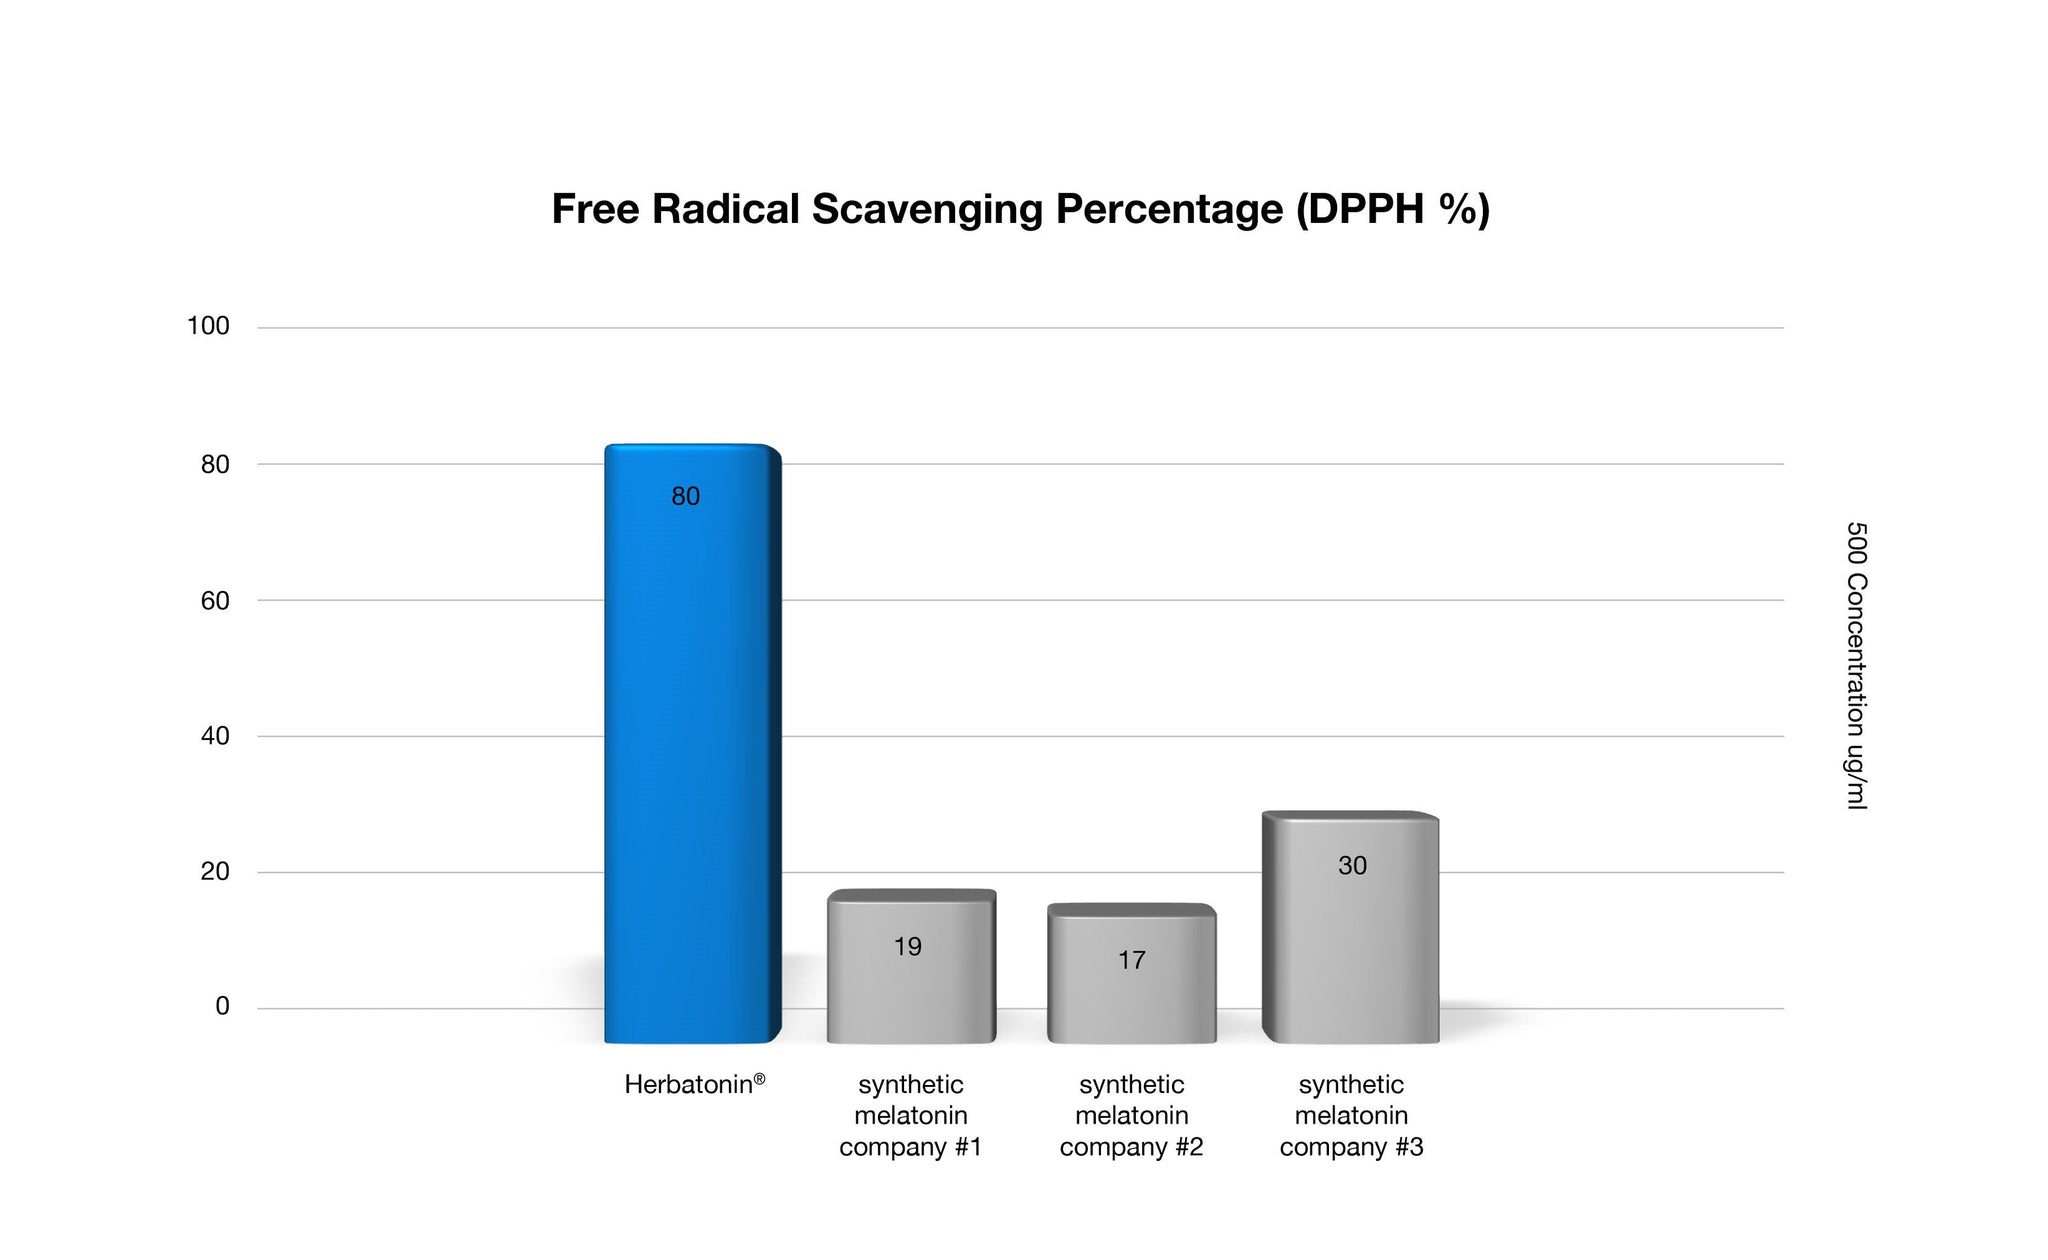 Chart of blue and gray bars of Free Radical Scavenging Percentage (DPPH%), Herbatonin 80% vs. synthetic melatonin 17% - 30%